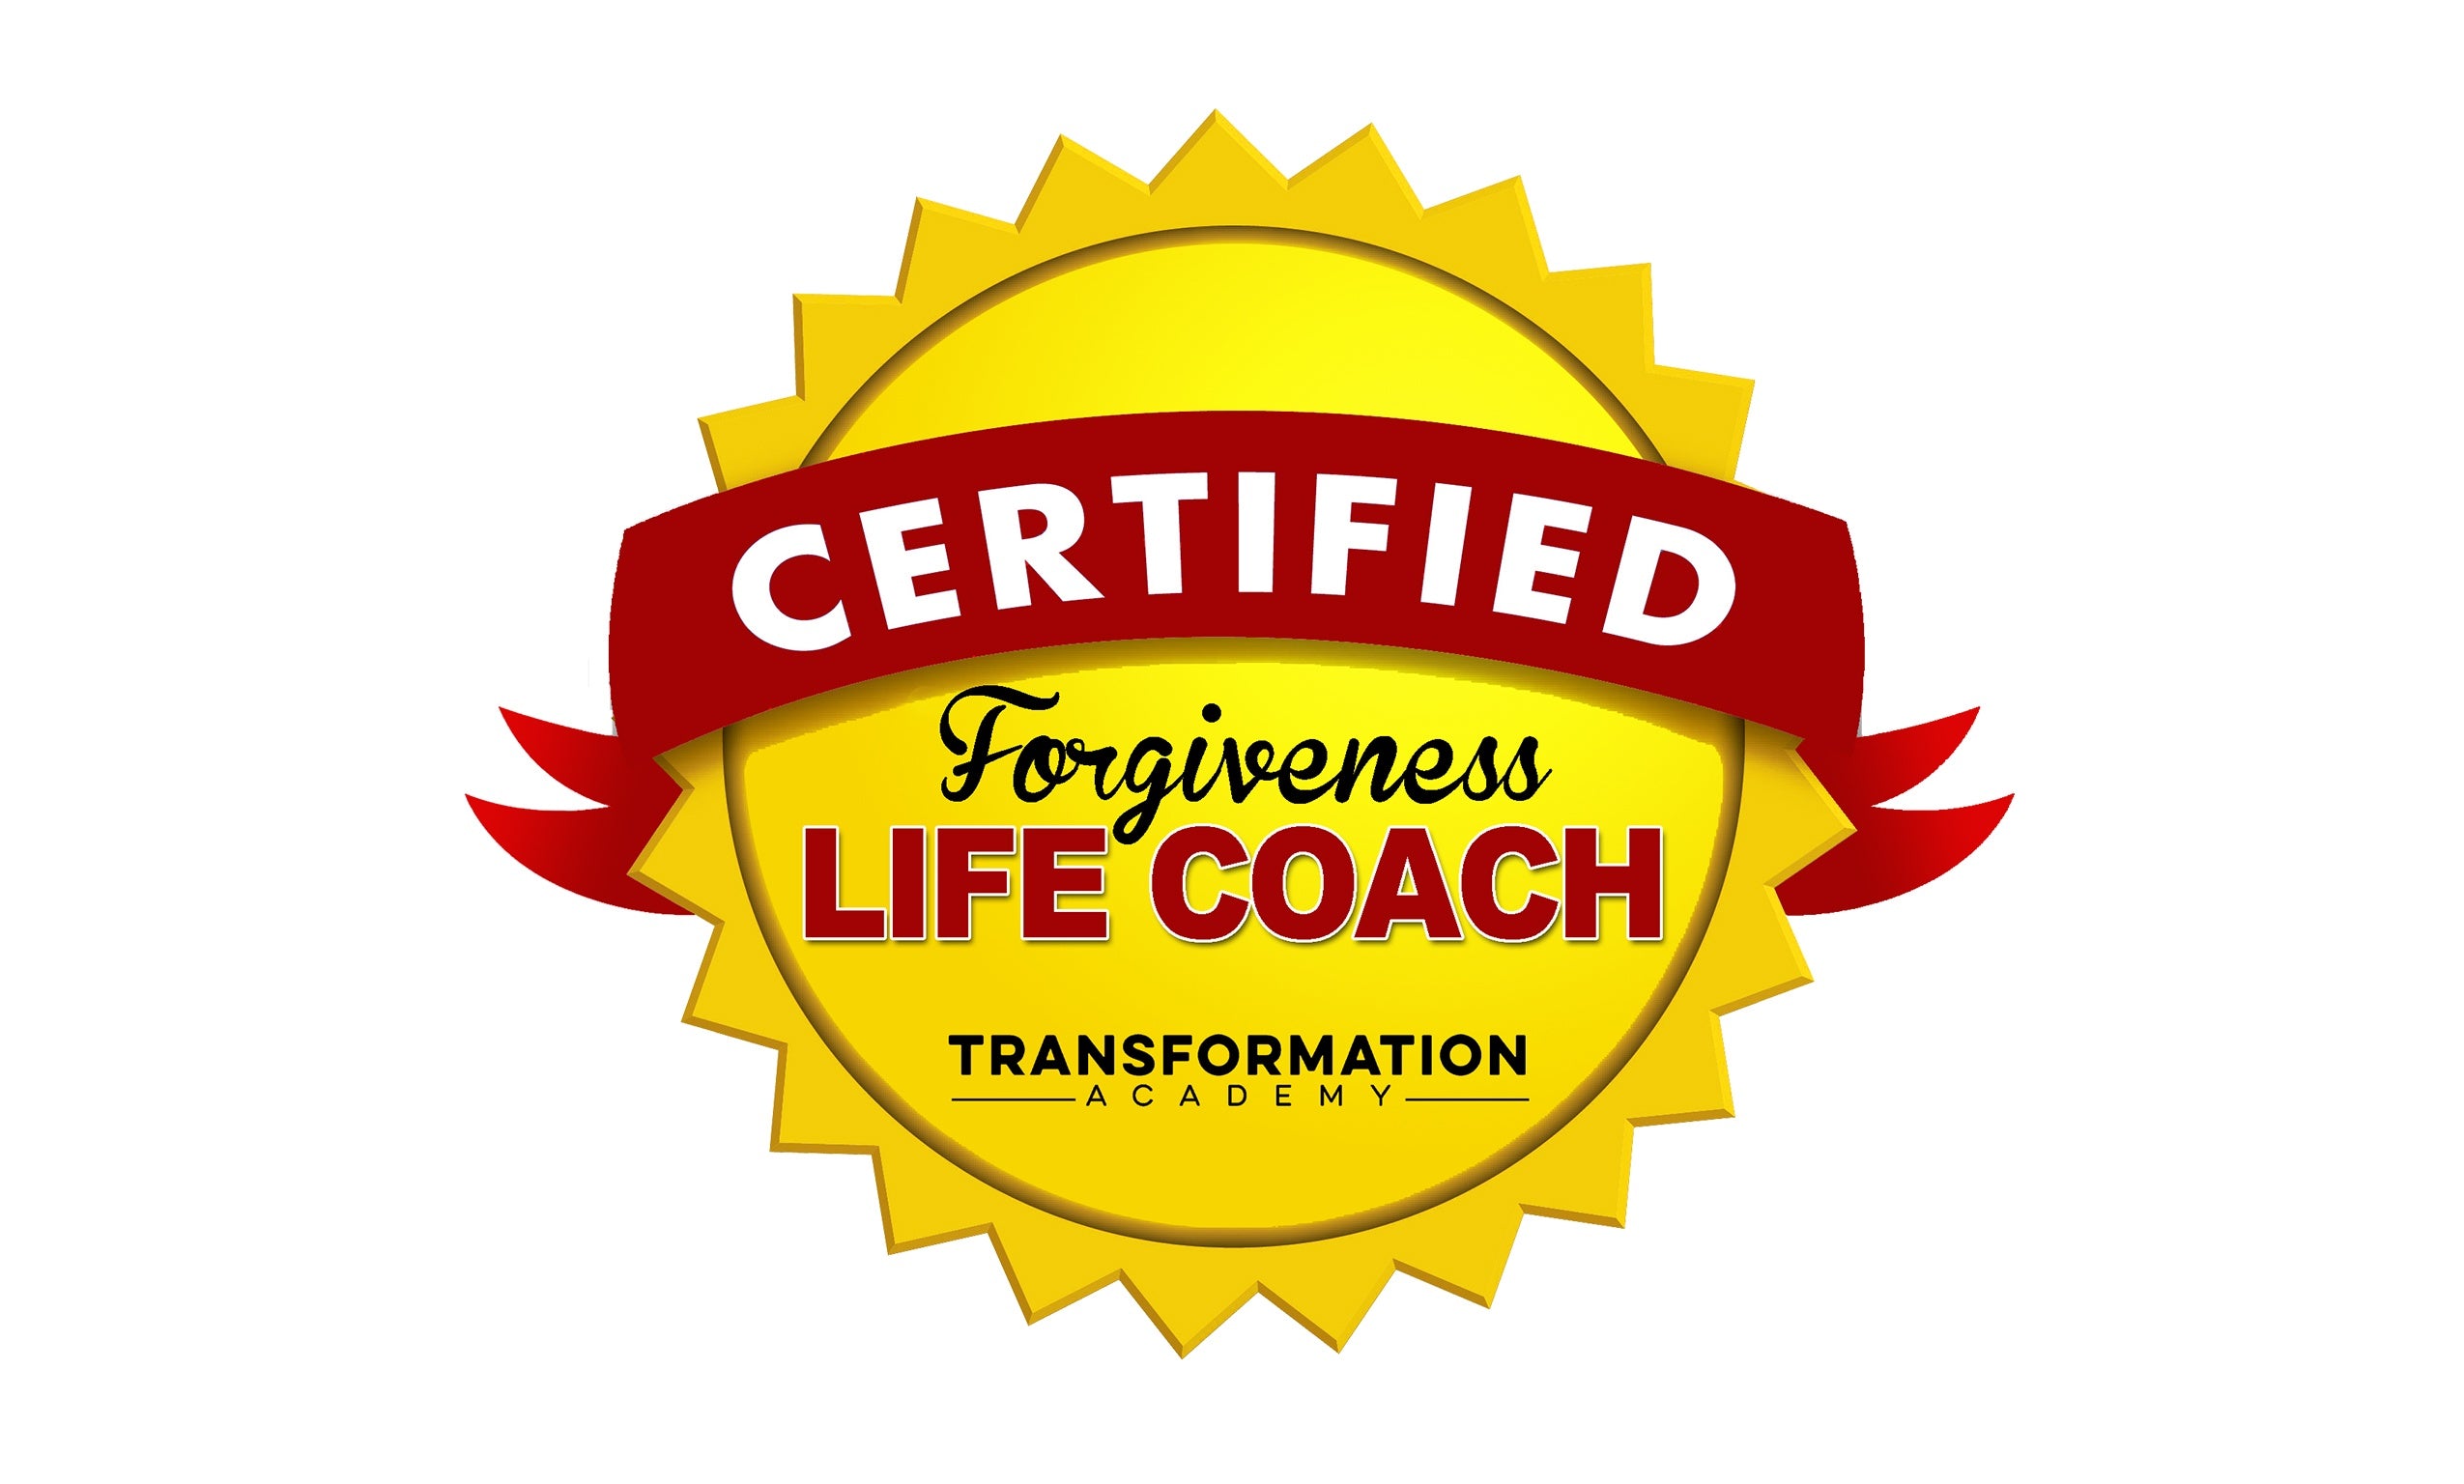 Forgiveness Life Coach Certification